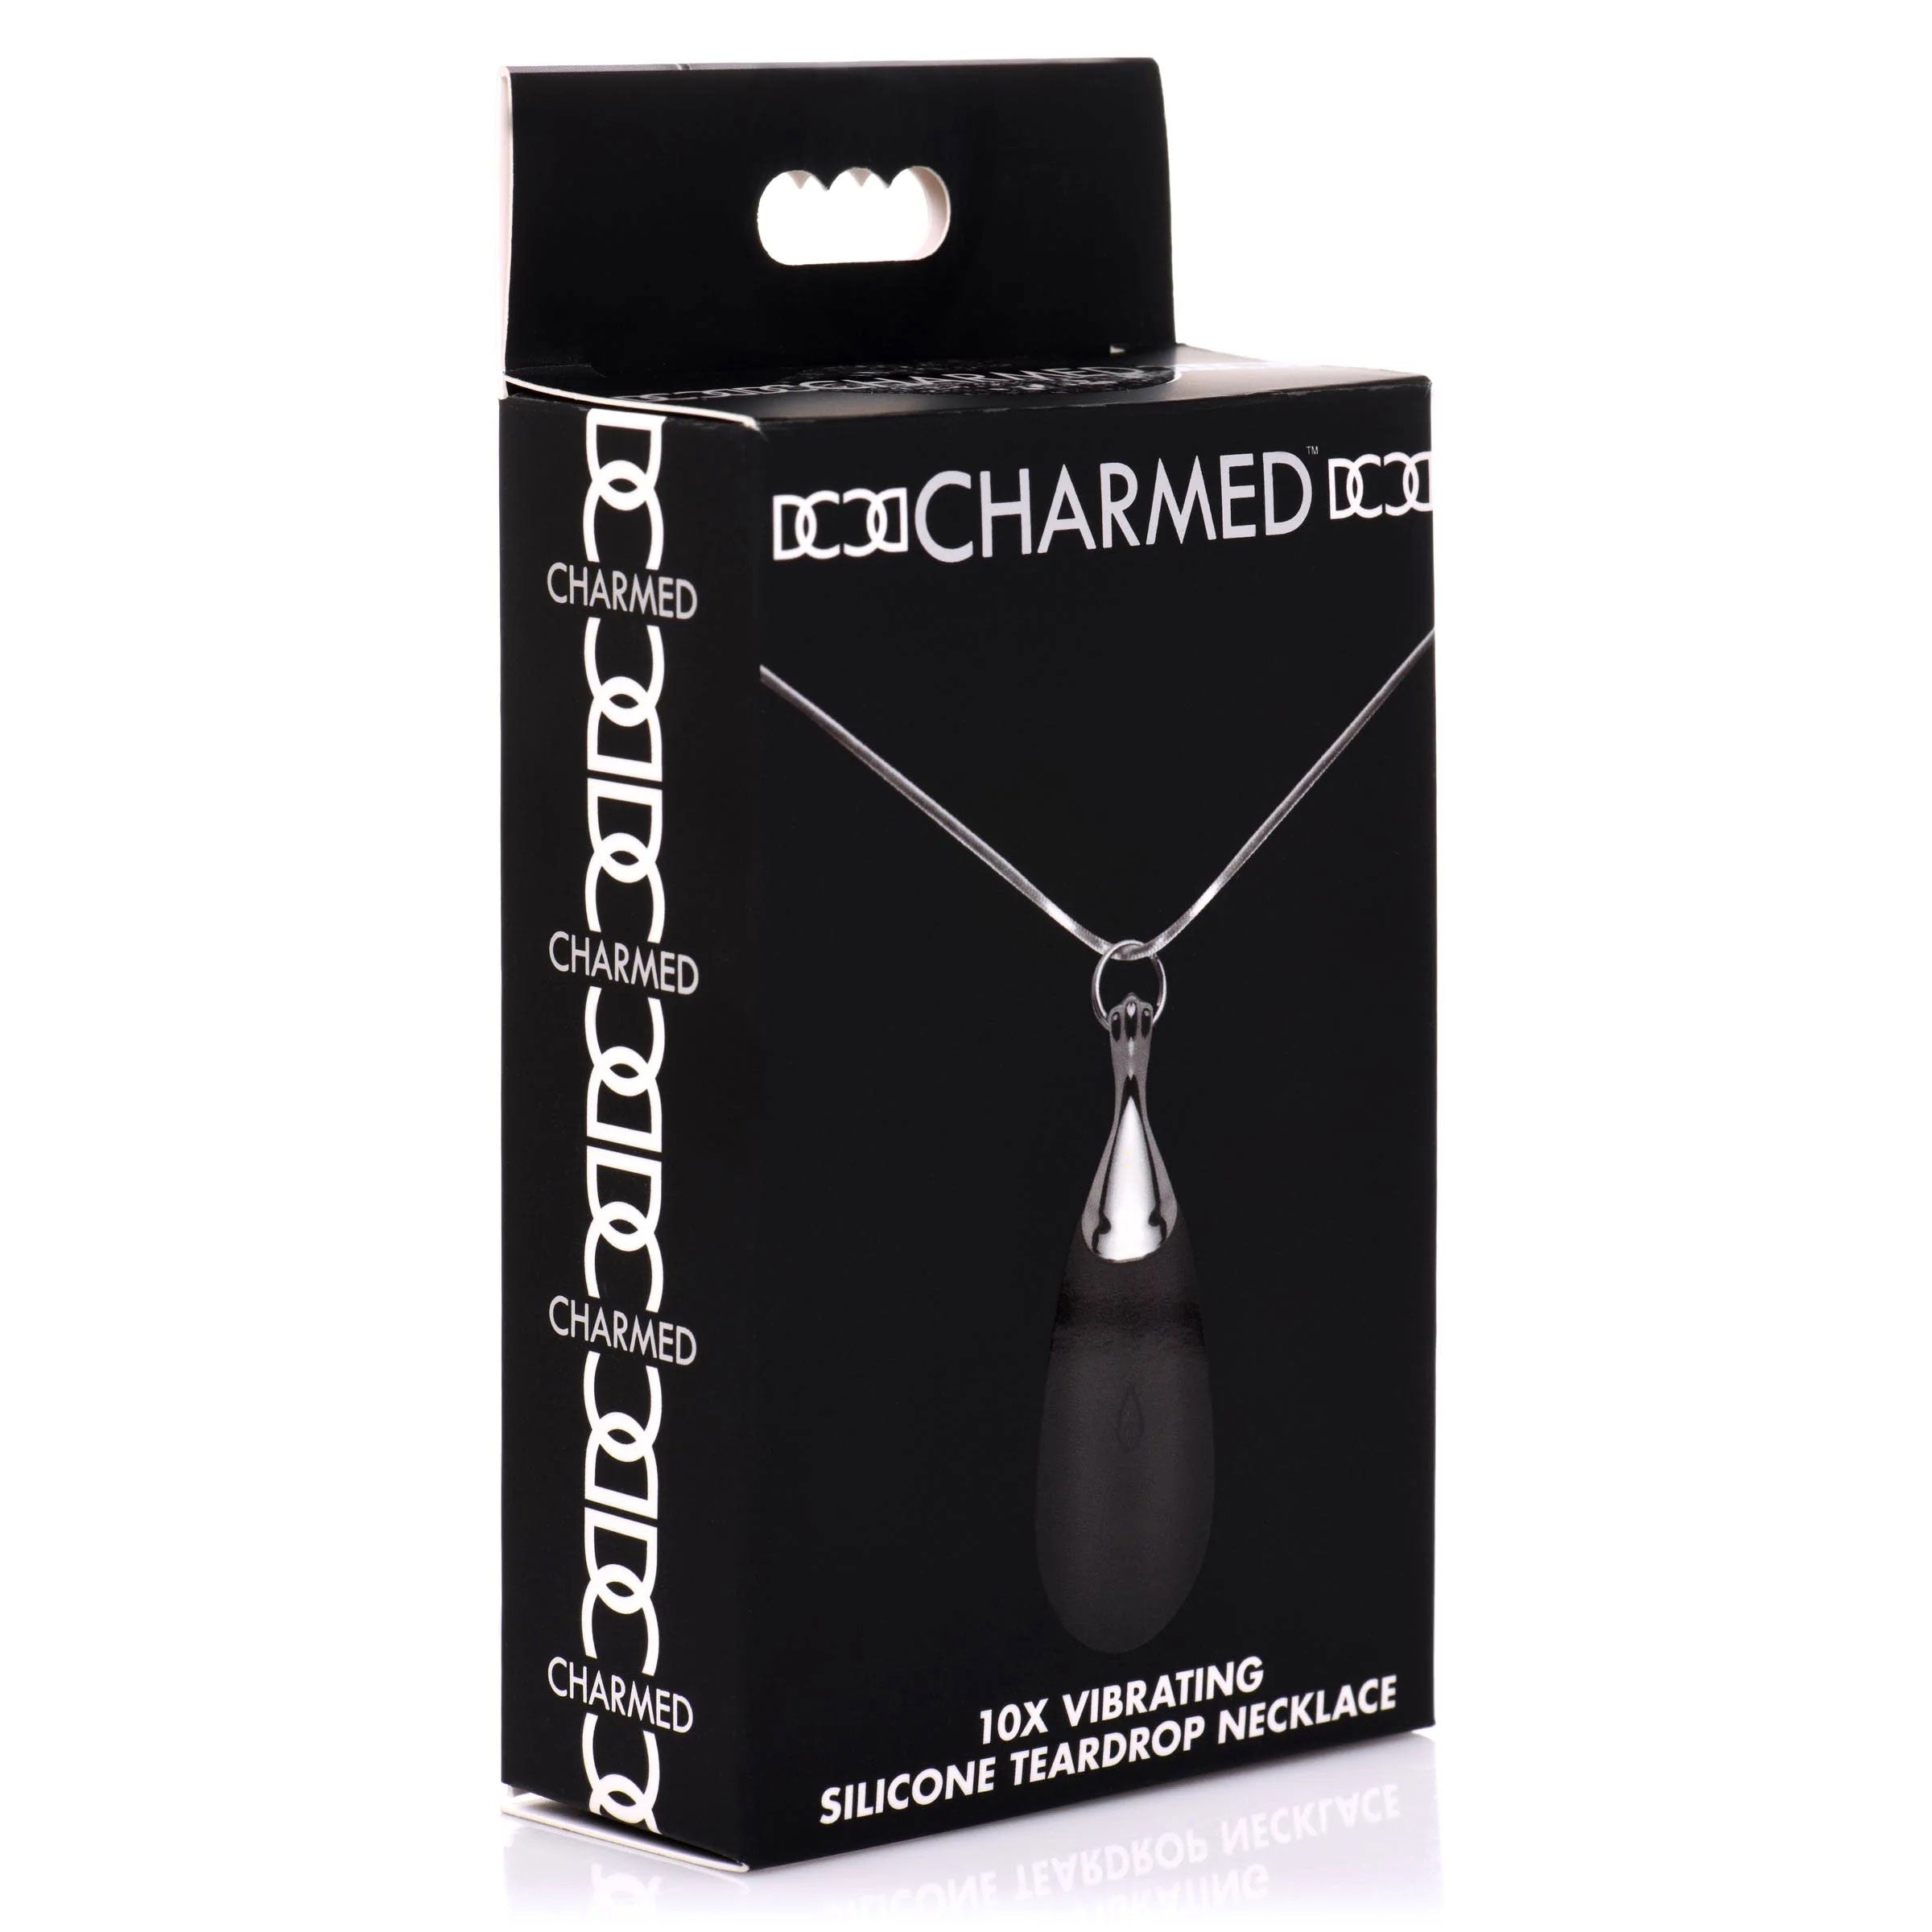 10x Vibrating Silicone Teardrop Necklace - Black